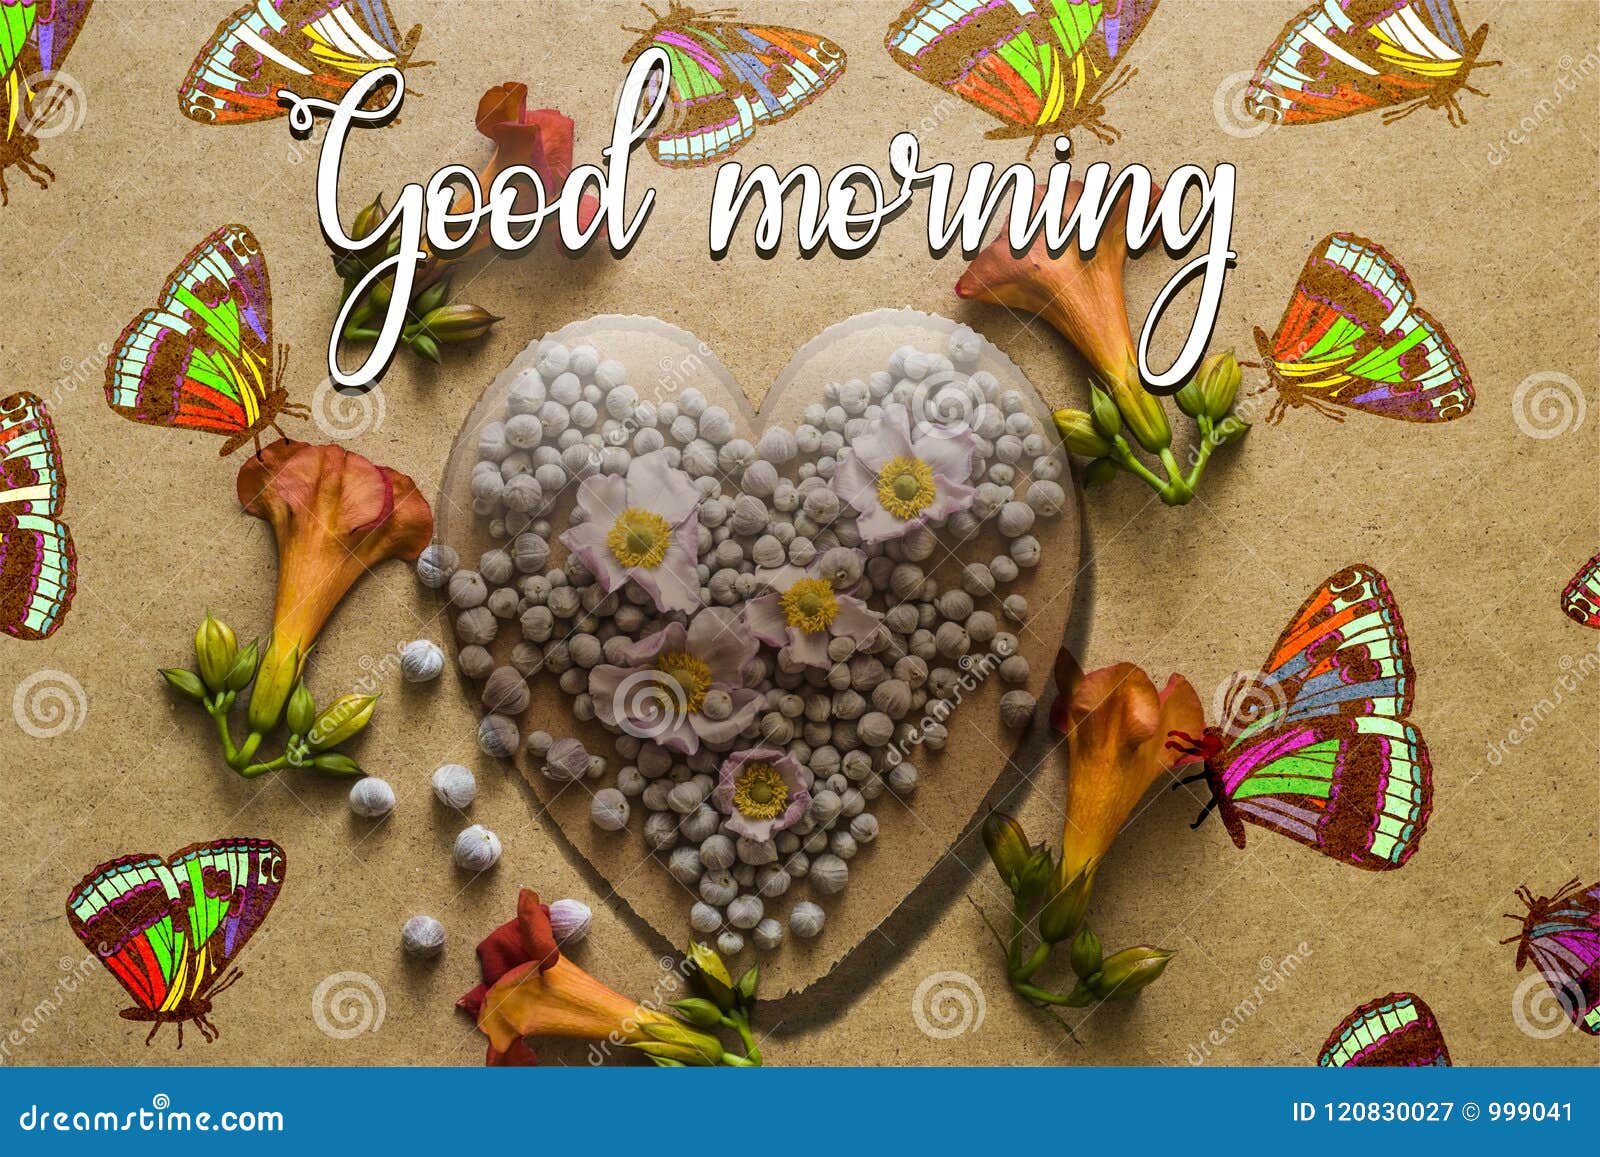 Good Morning Flower Buds Card Illustration Stock Image - Image of ...